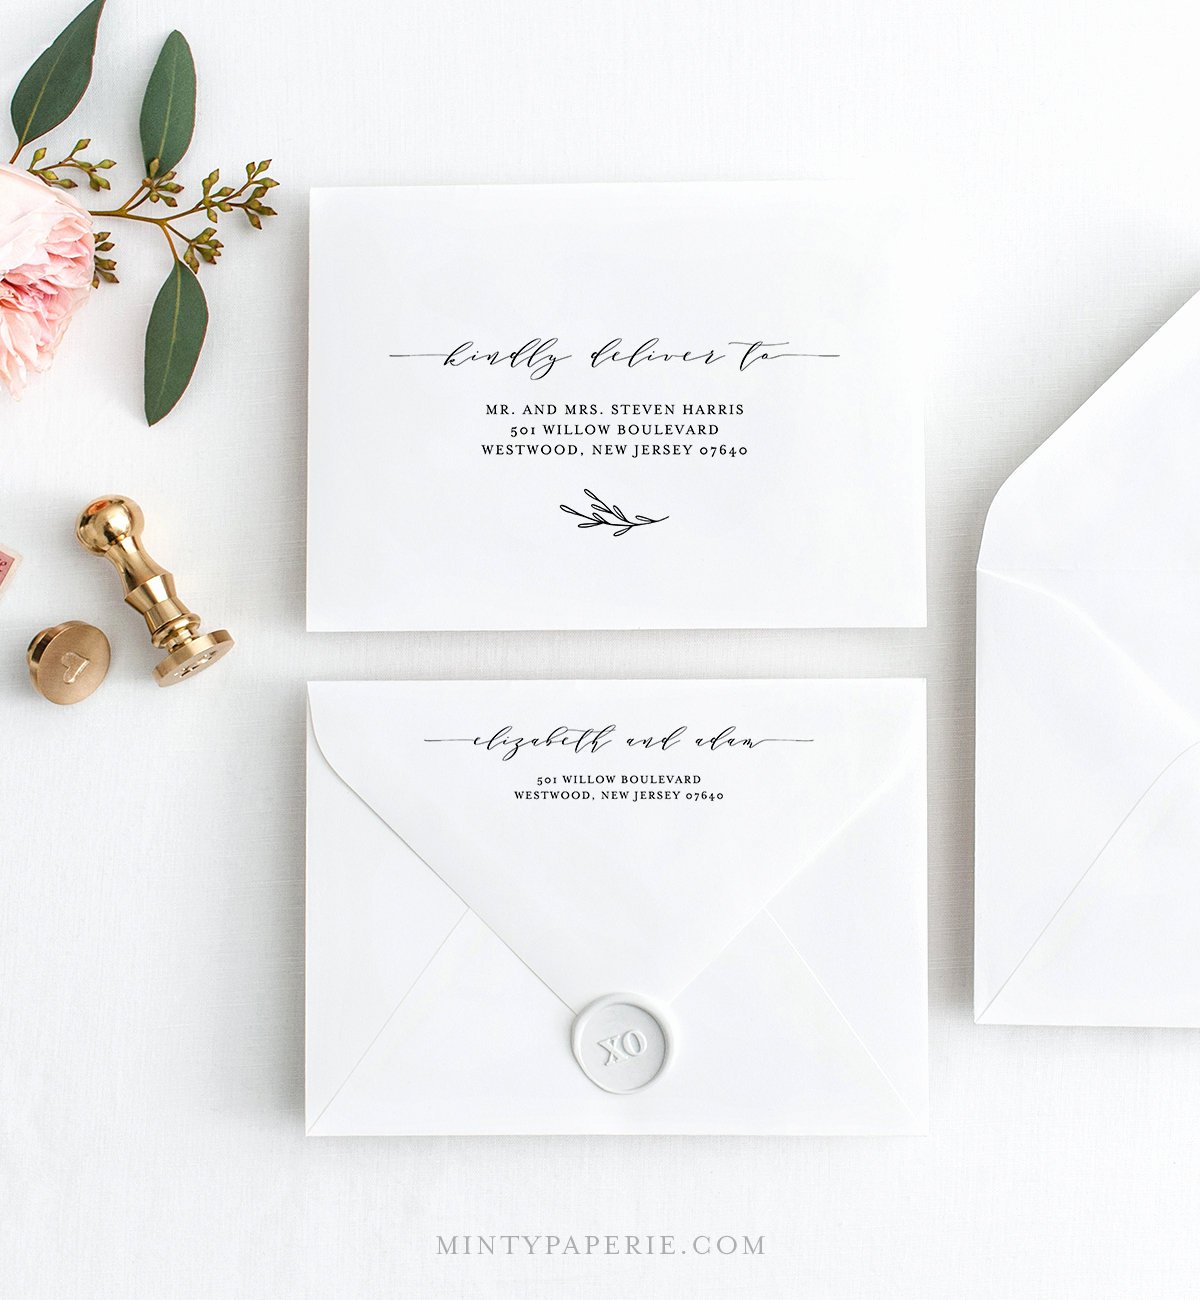 Wedding Envelope Address Template Elegant Envelope Address Template Printable Wedding Envelope